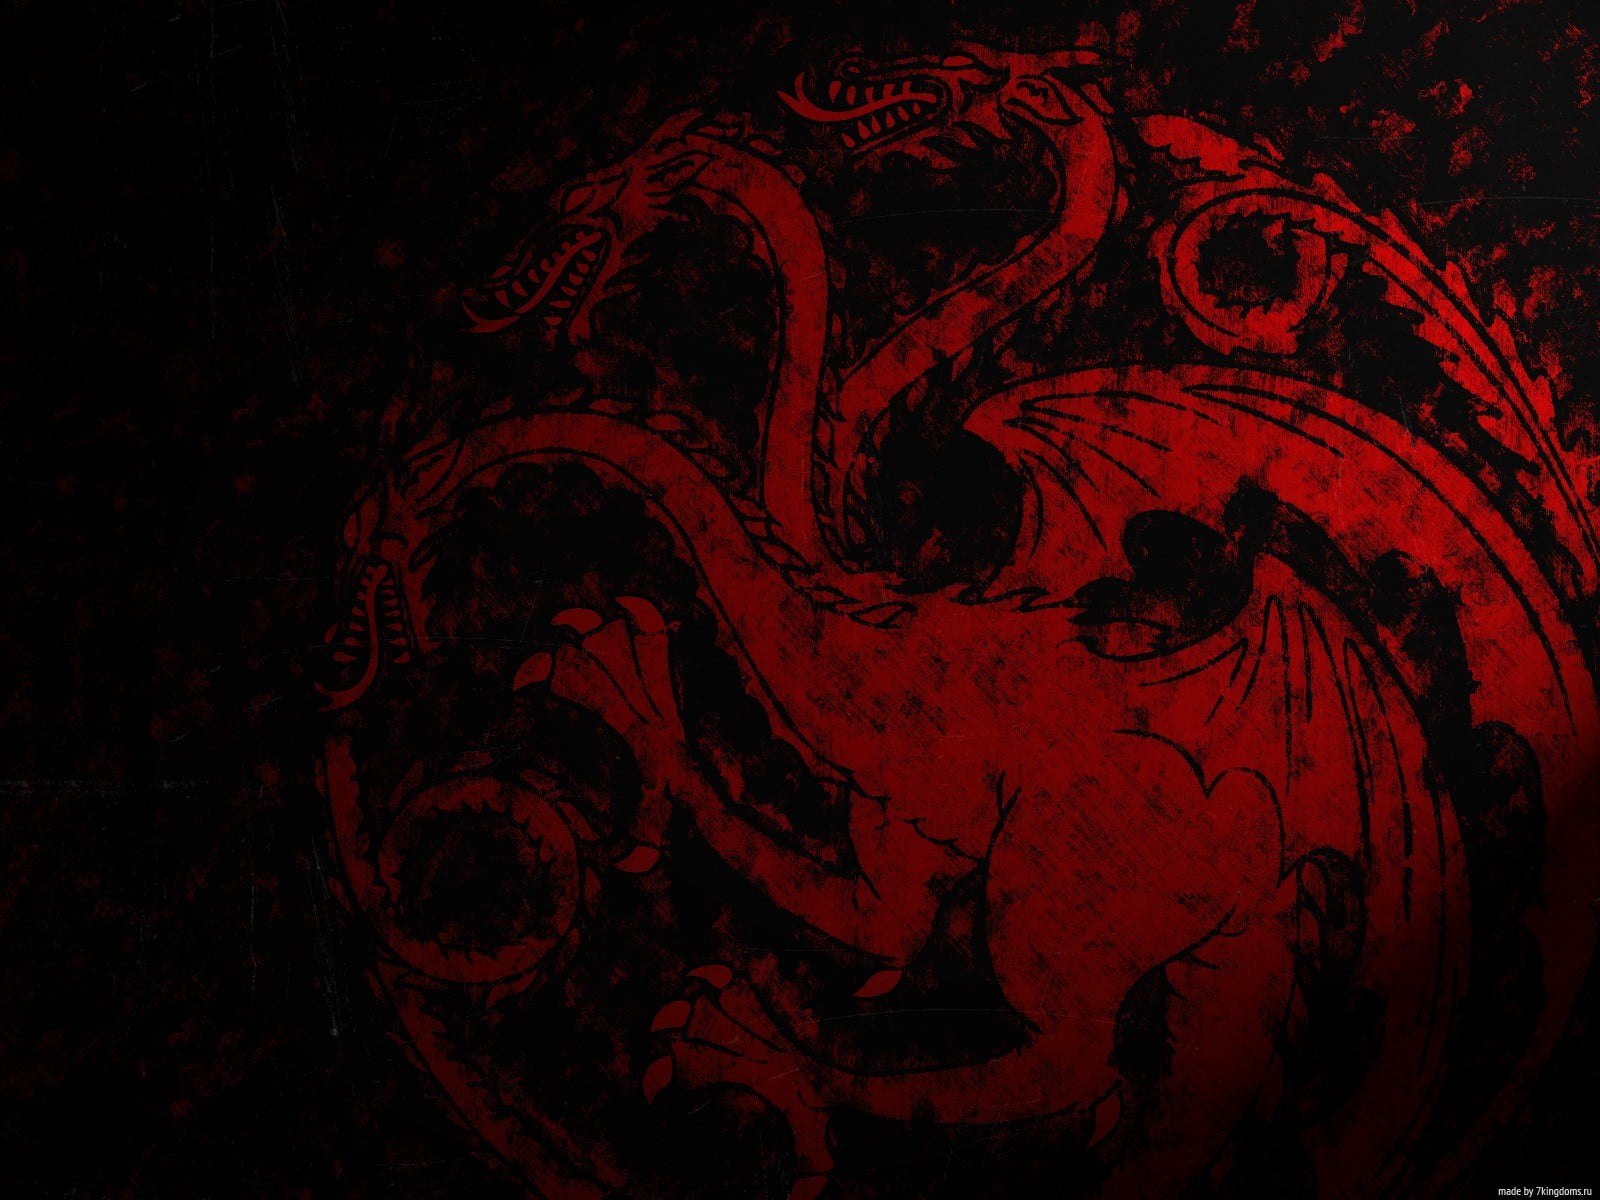 red 3-head dragon painting, Game of Thrones, House Targaryen, sigils, TV